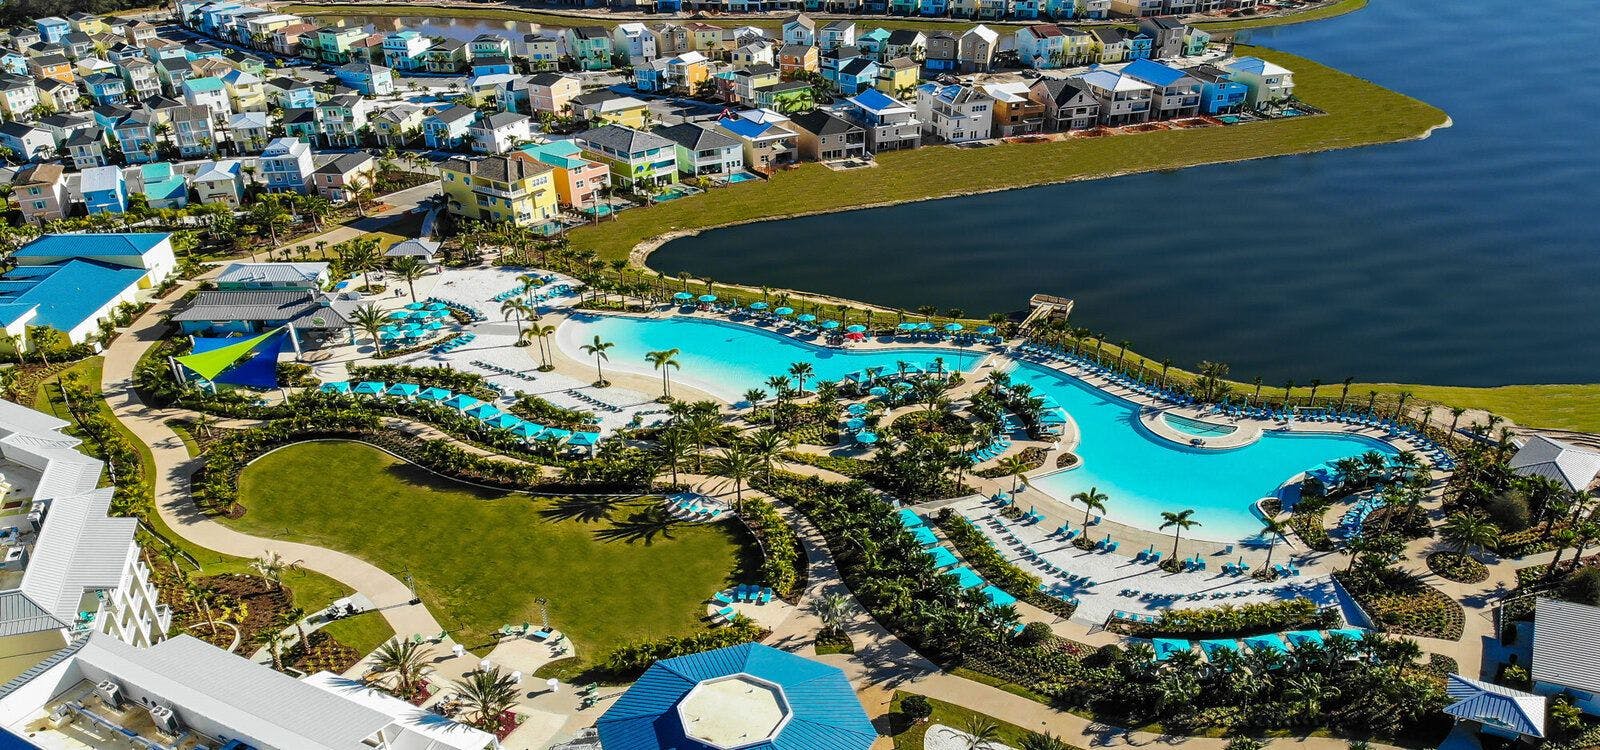 Orlando lake house rental communities like Margaritaville Resort